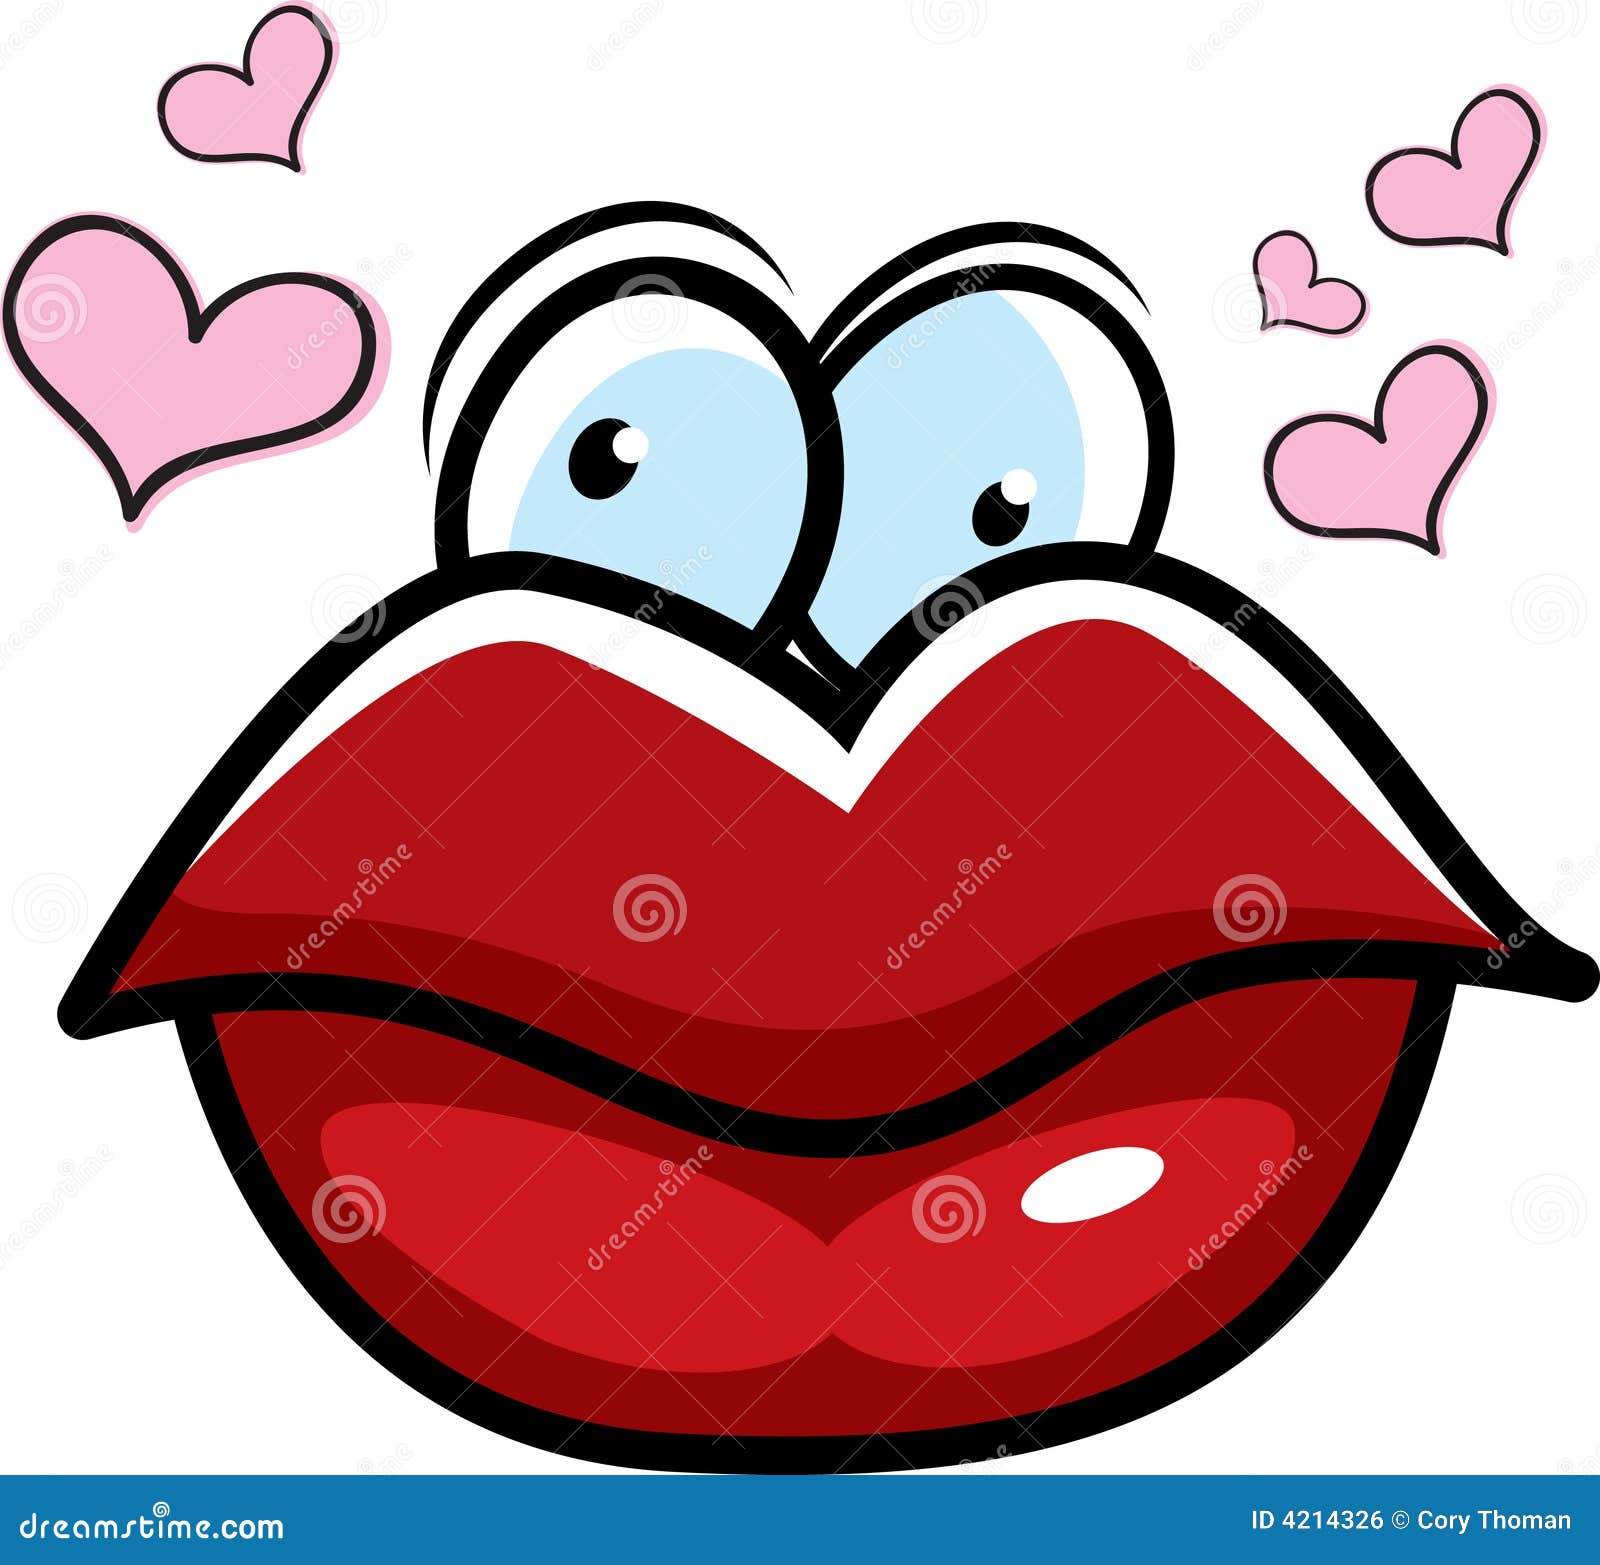 clip art of puckered lips - photo #33